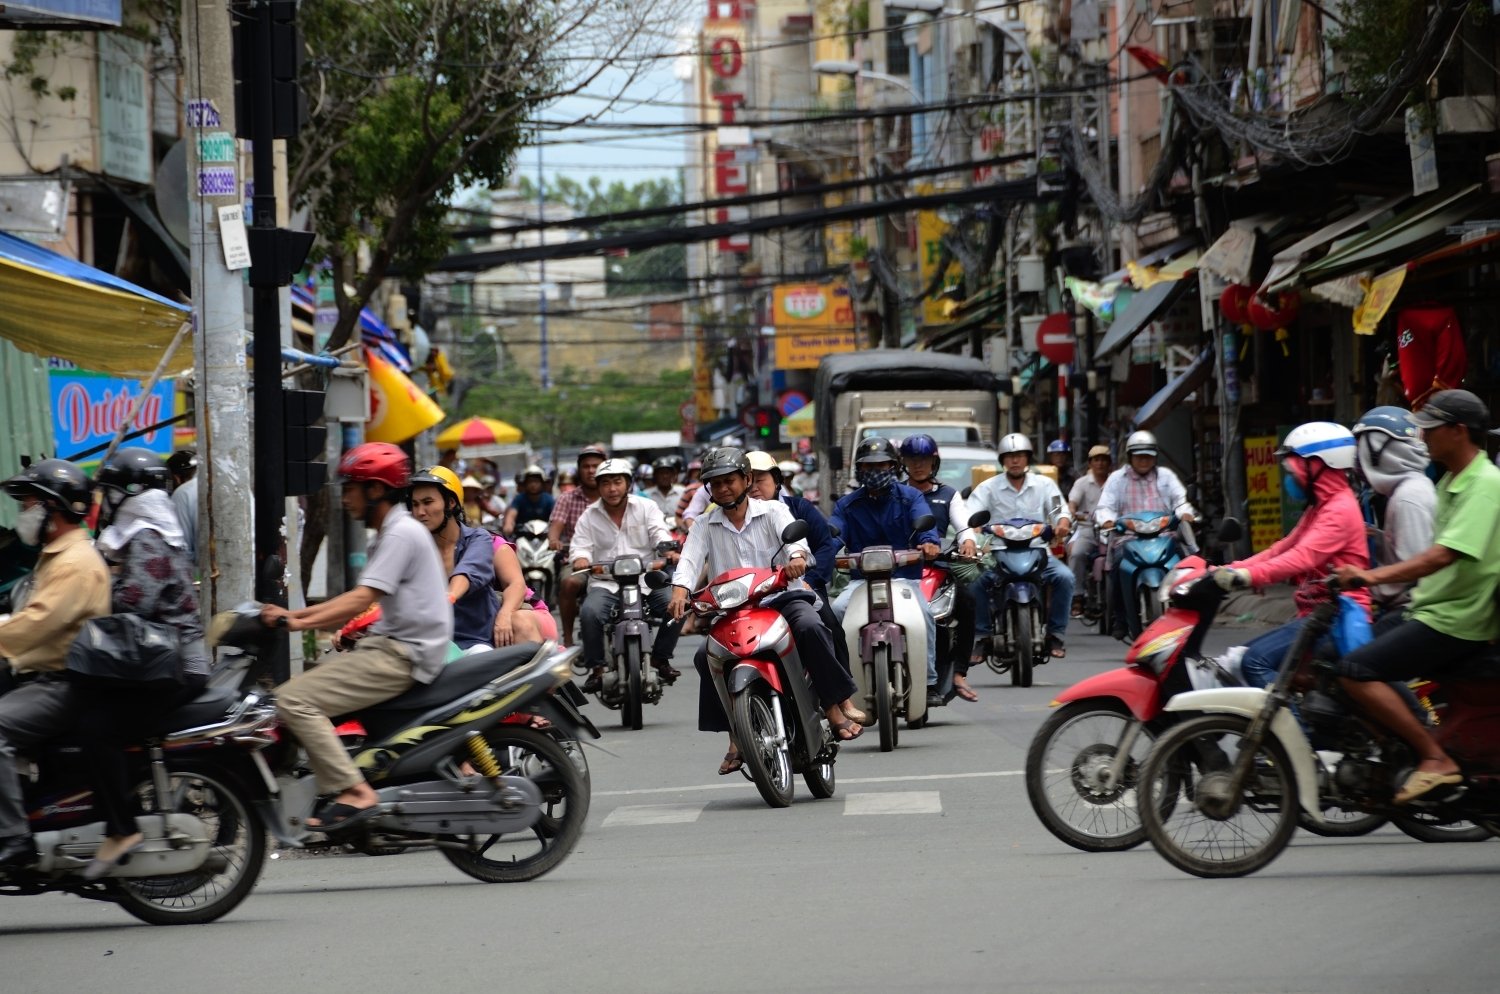 trafic caotic - Hanoi